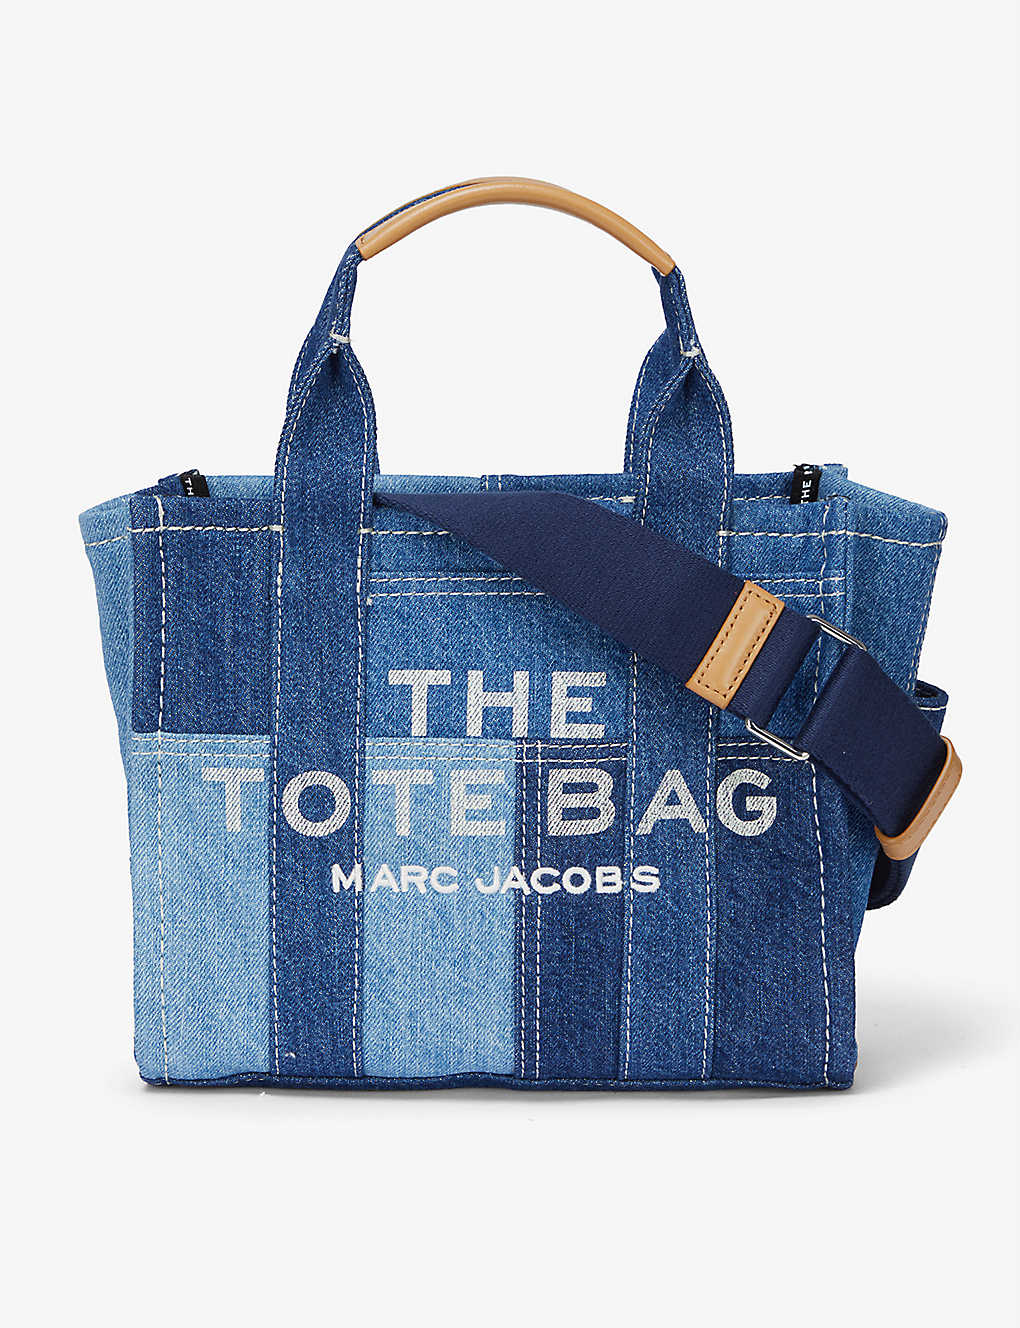 selfridges.com | MARC JACOBS The Mini Traveller Tote denim tote bag